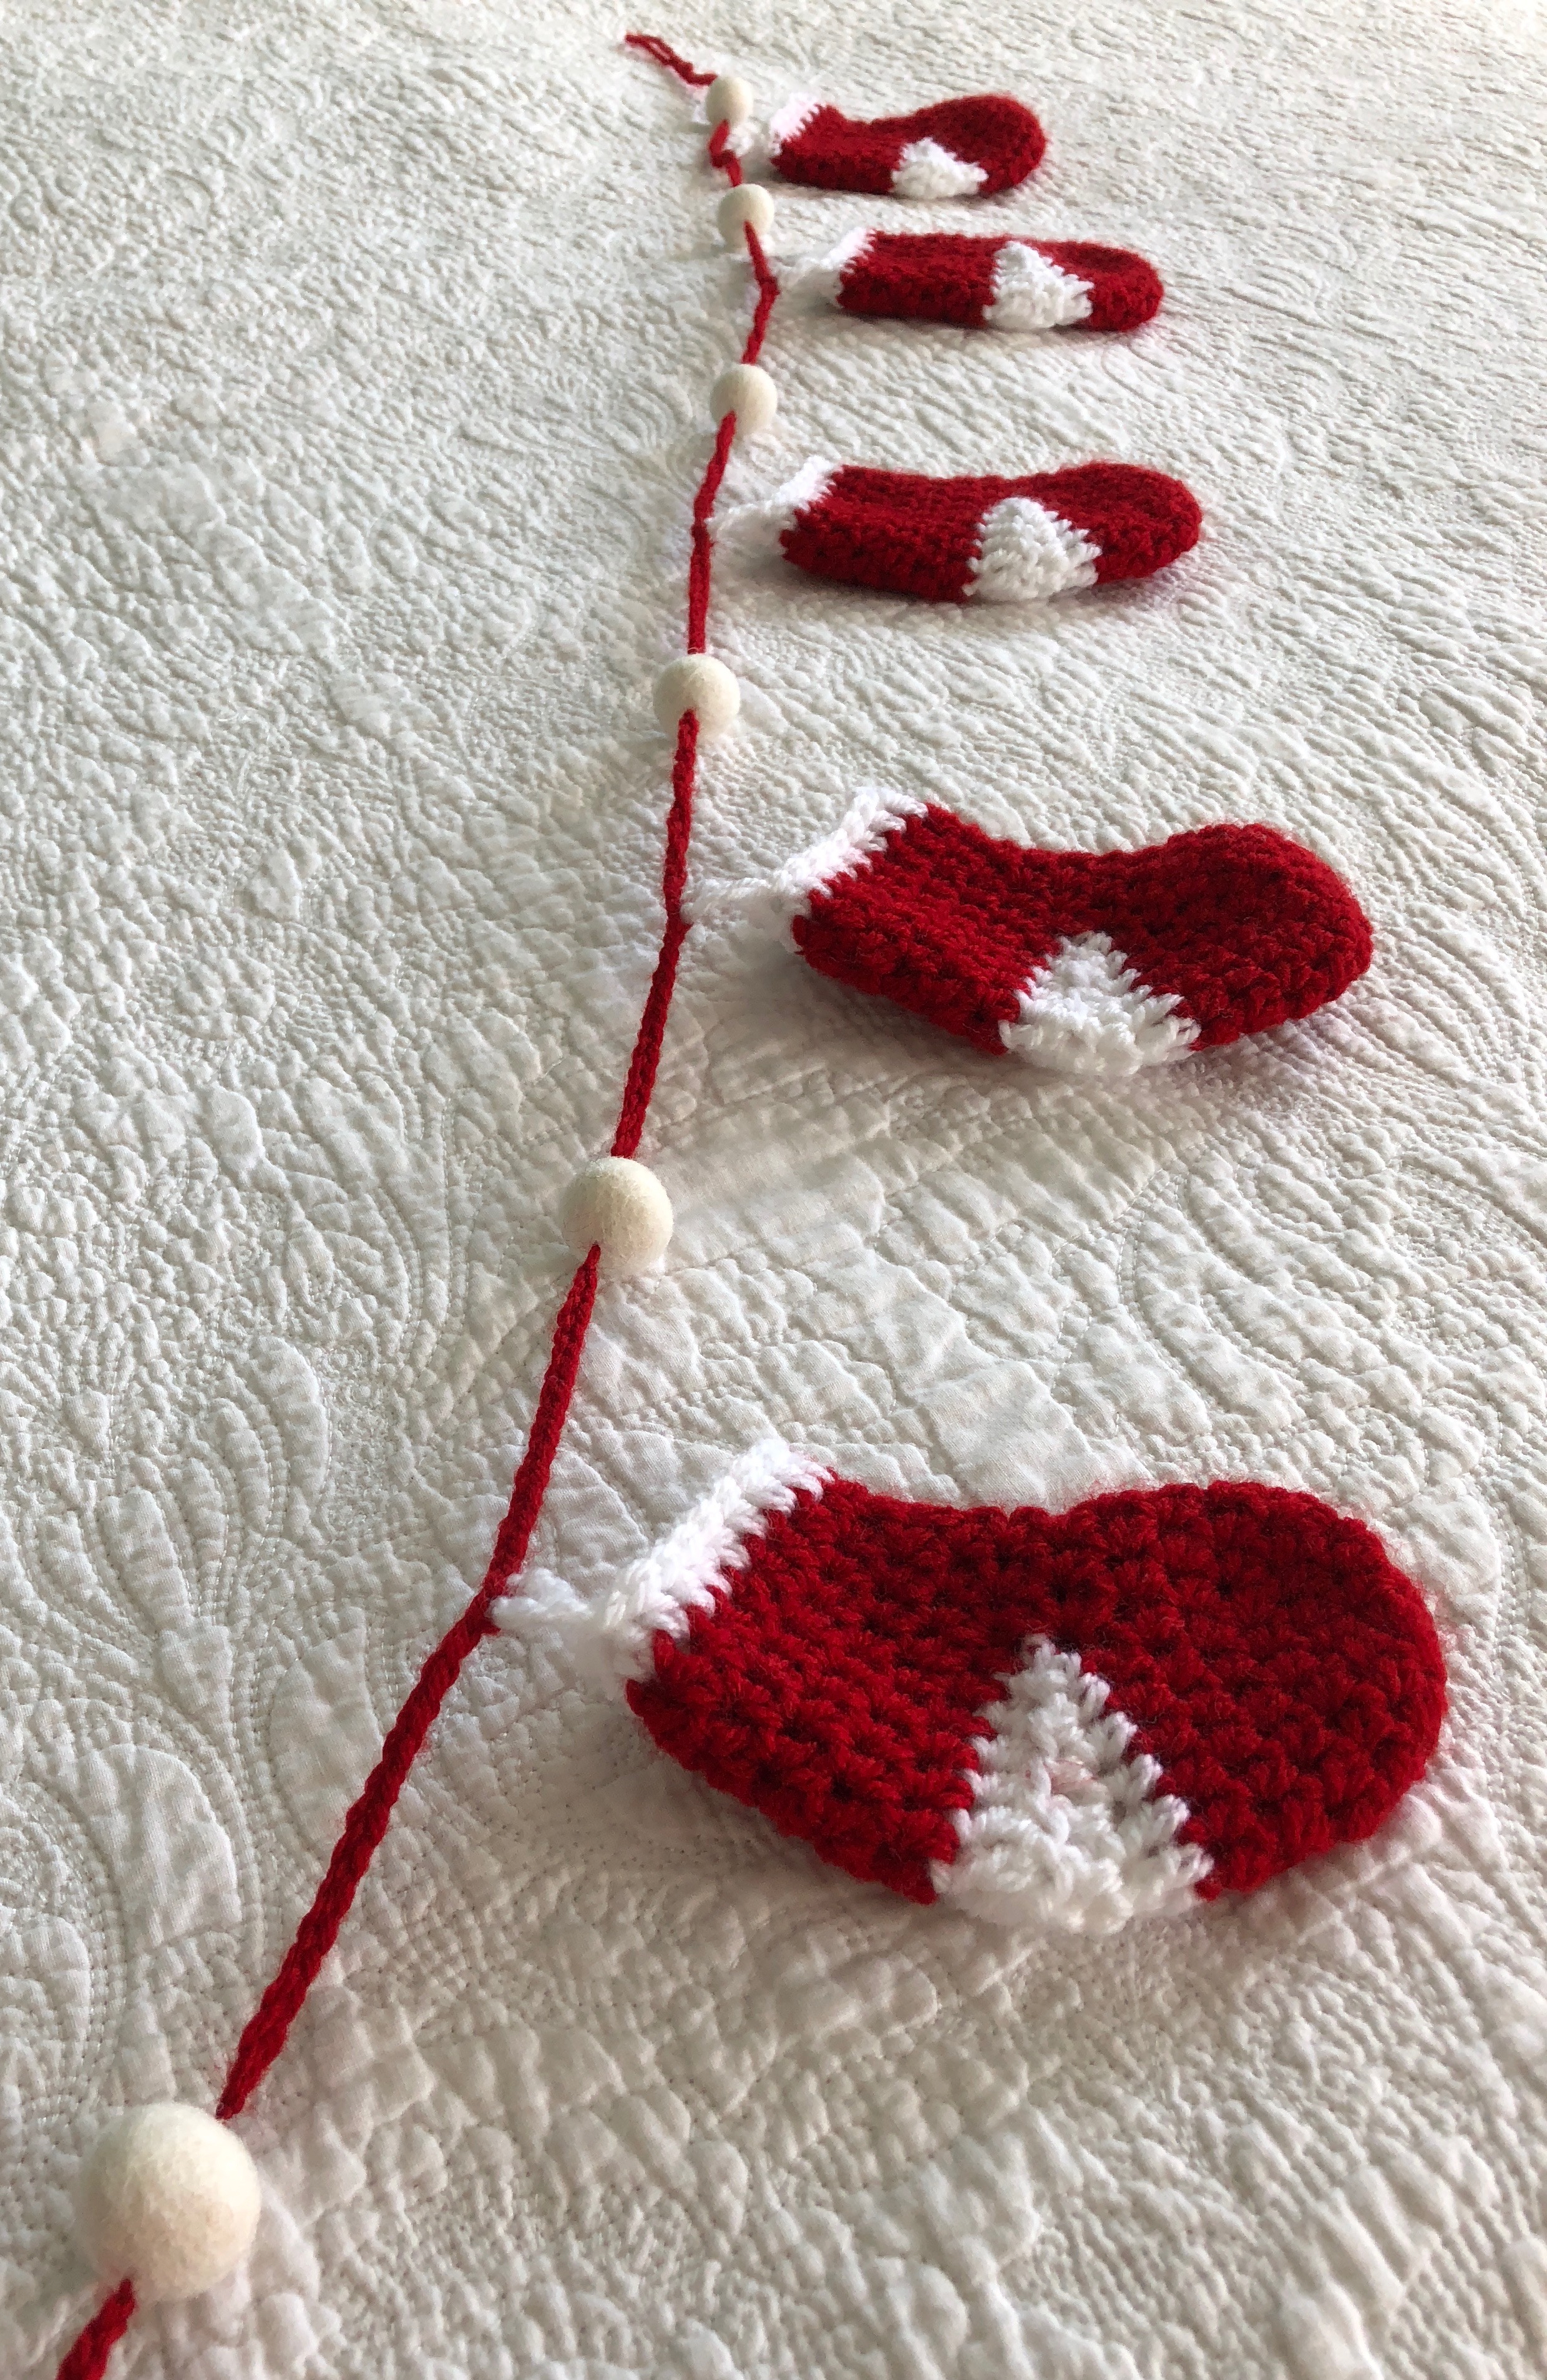 Handmade, crocheted, red and white stockings and white felt pom-pom garland.